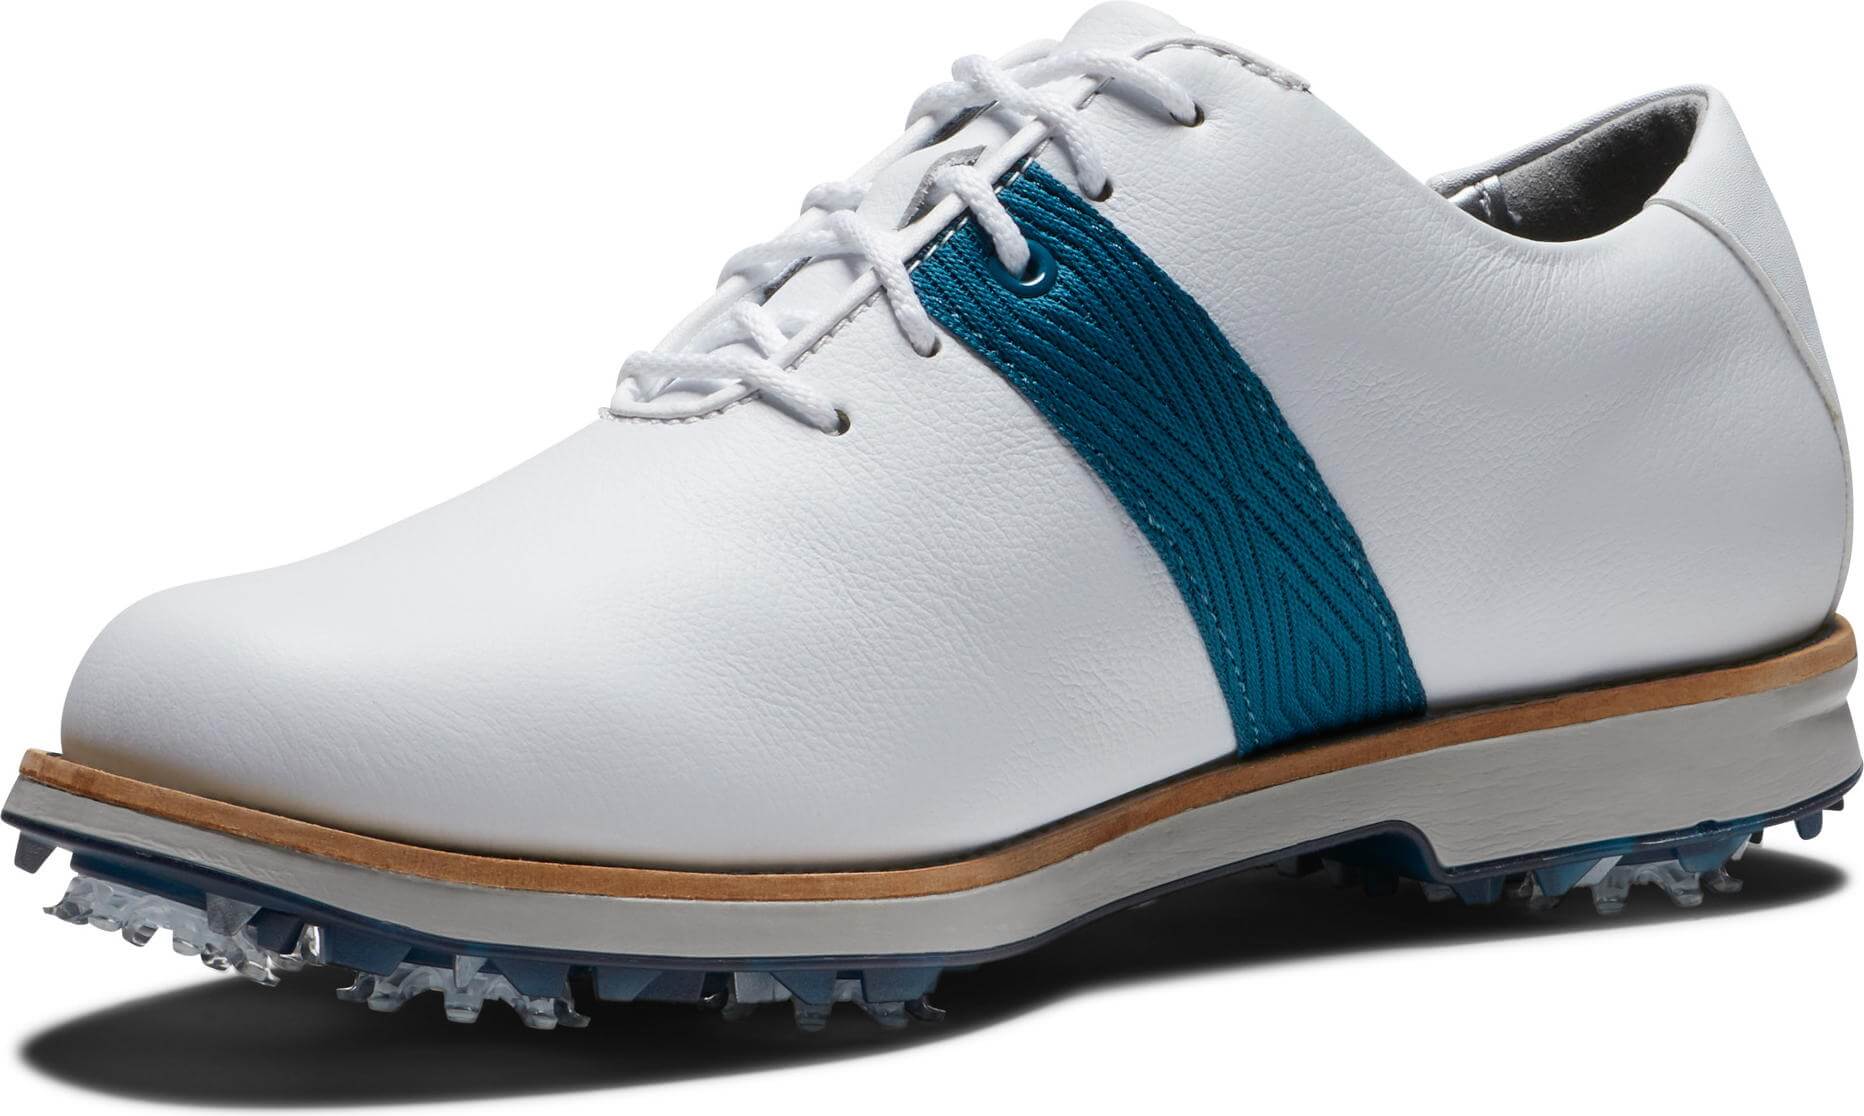 FootJoy Premiere Series Golfschuh, M, white/blue